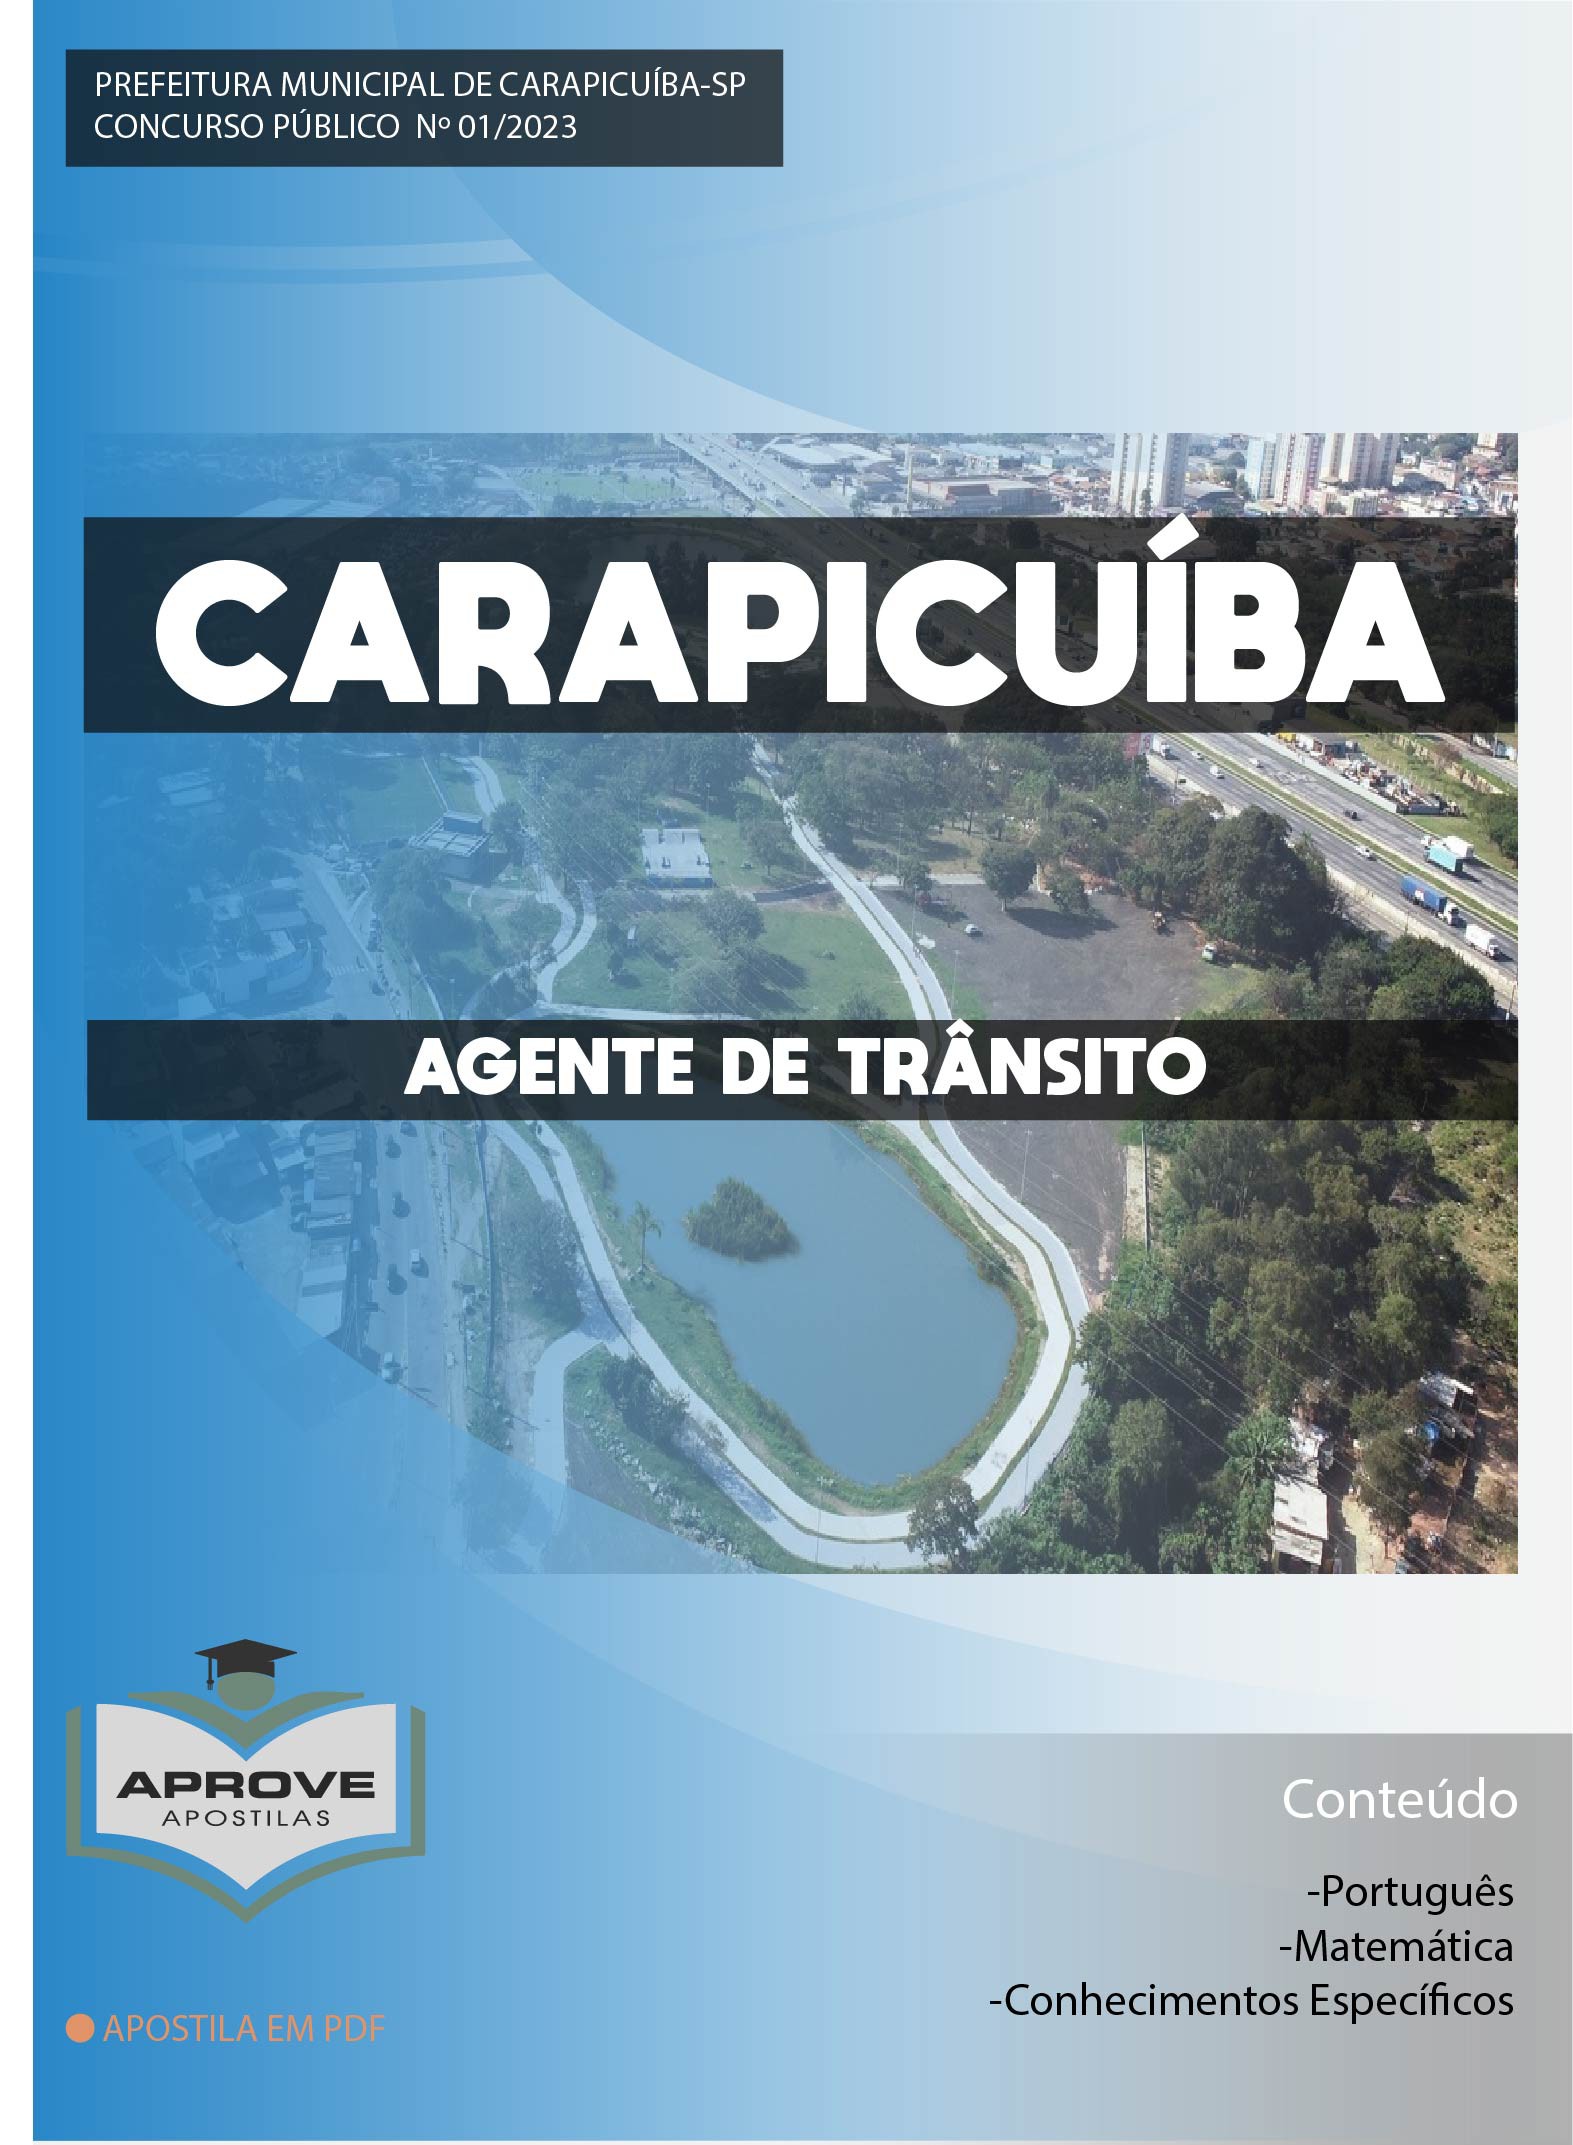 Município de Carapicuíba/SP